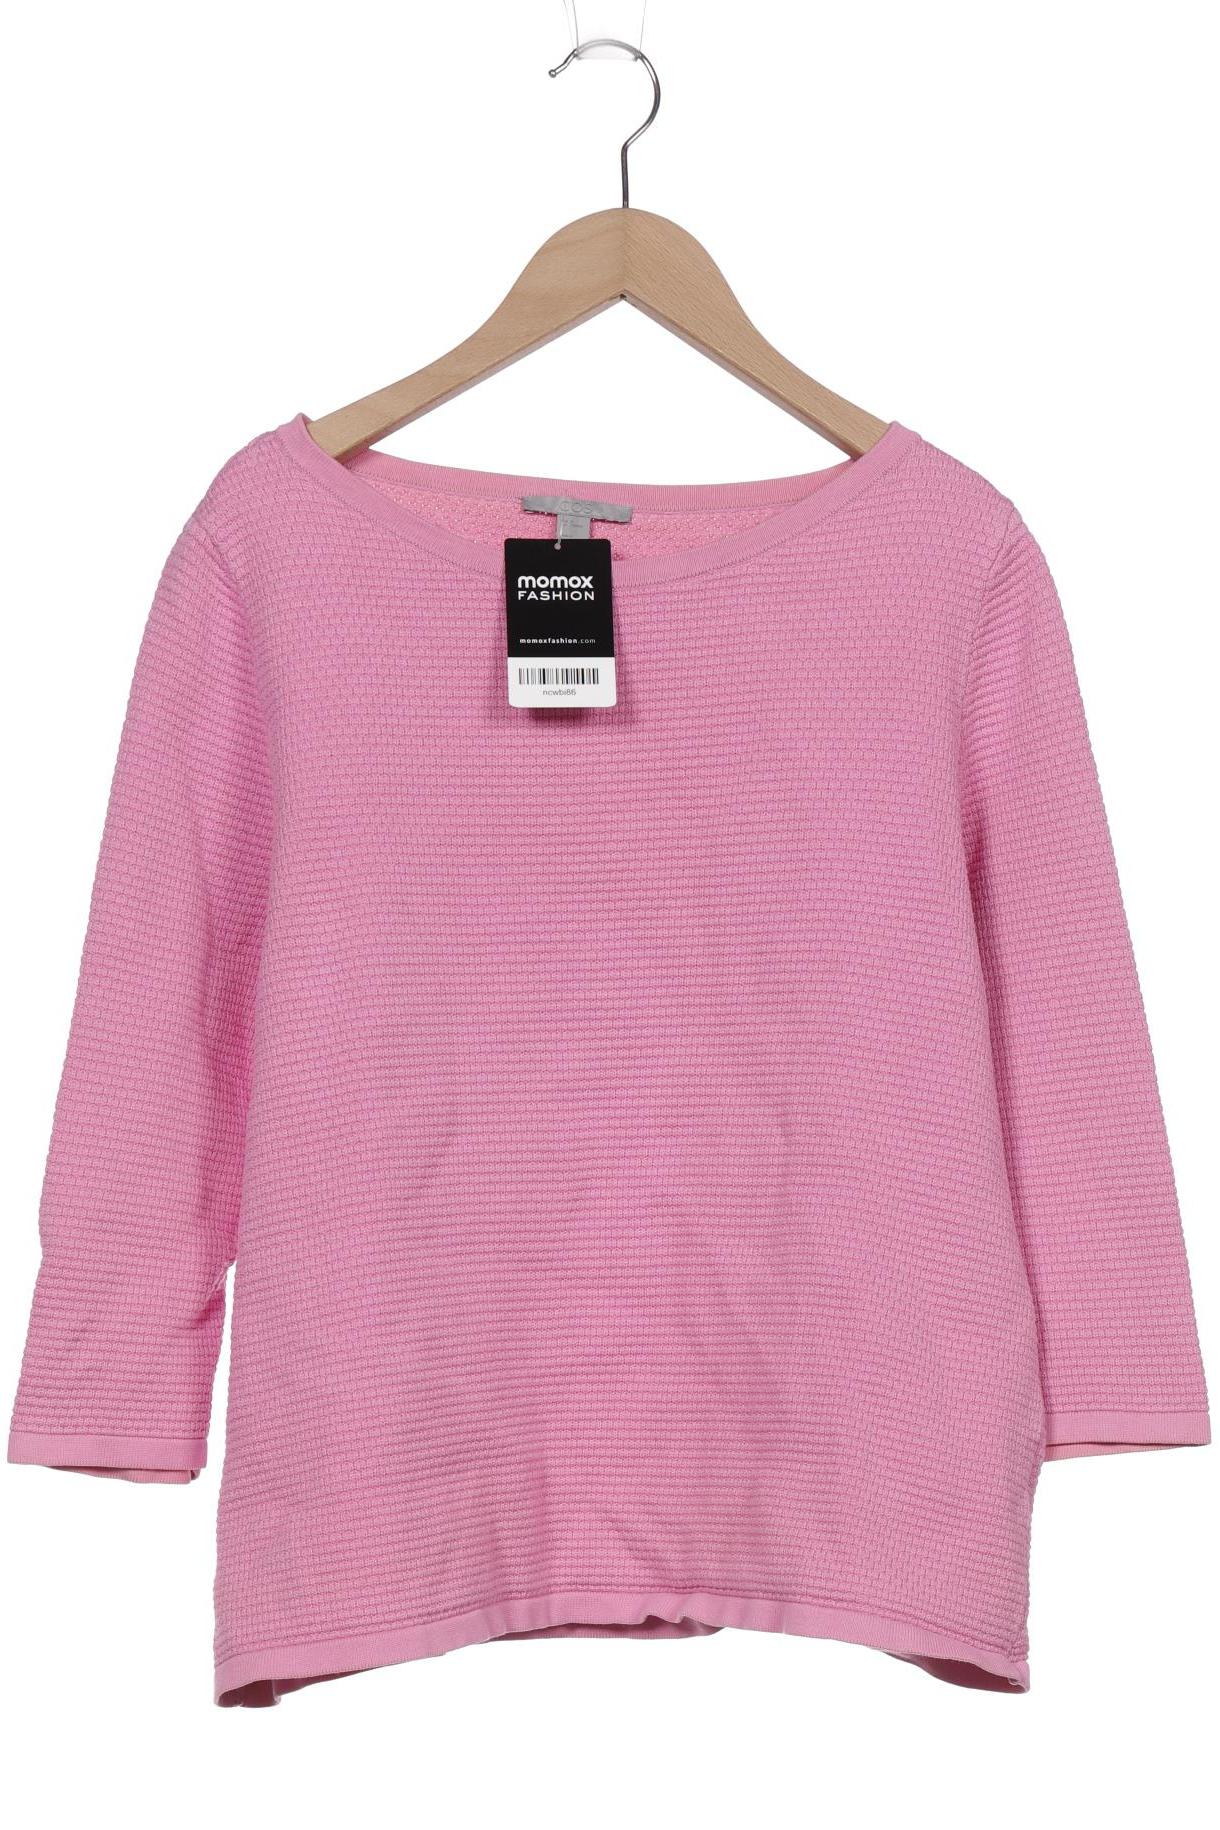 COS Damen Pullover, pink von COS